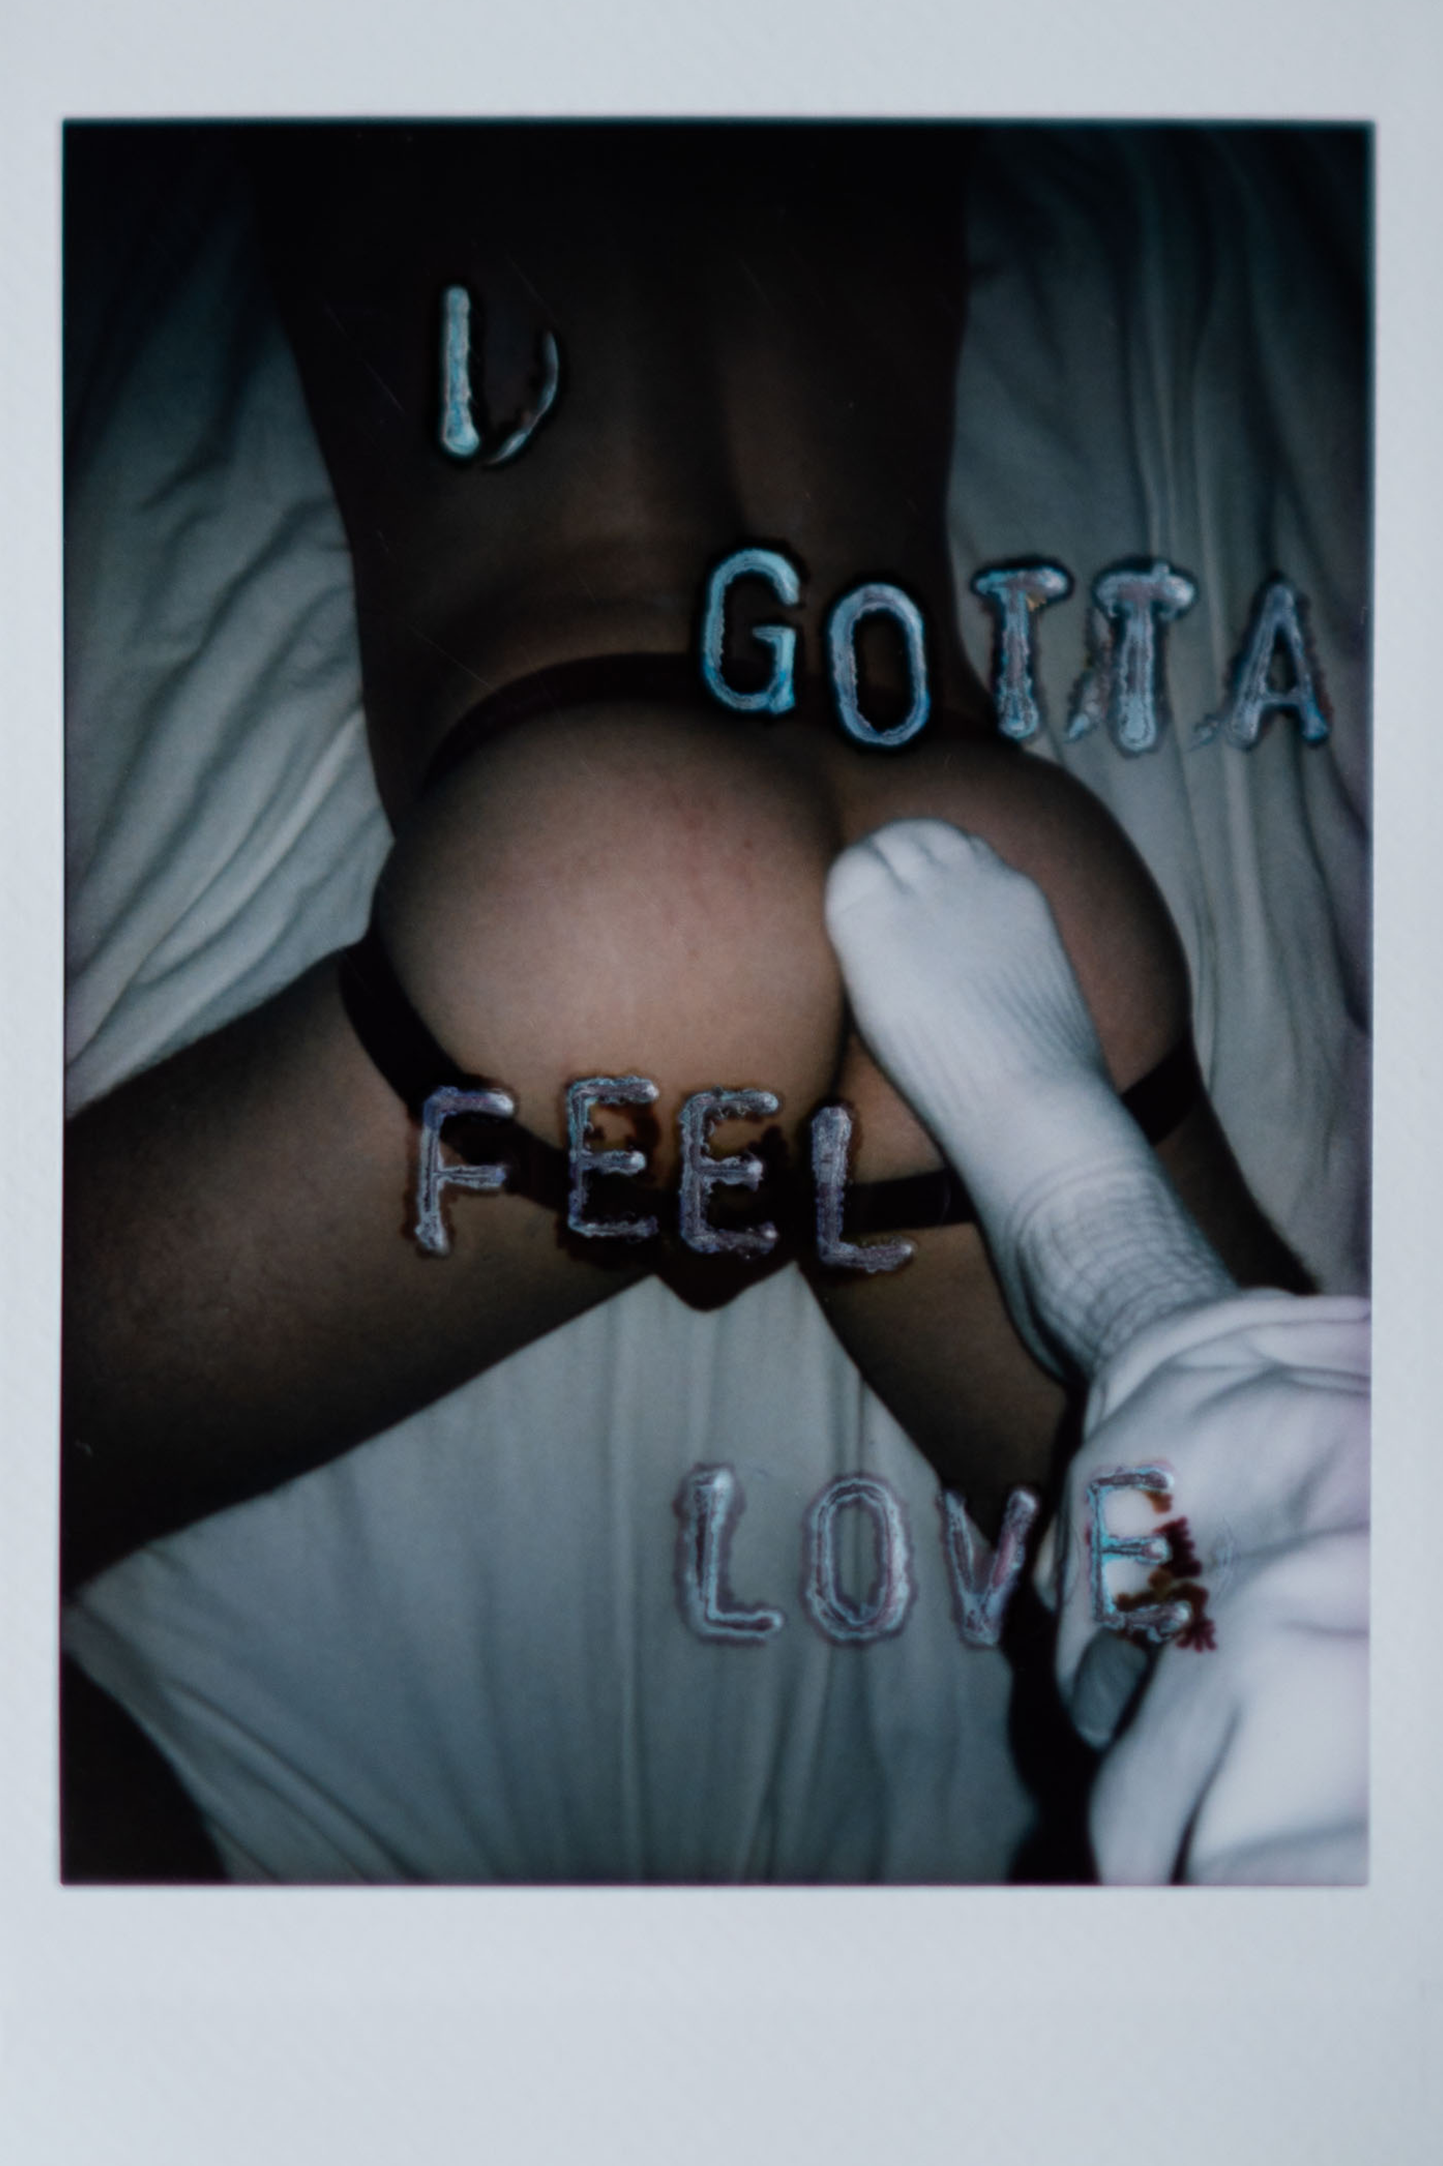 'I Gotta Feel Love' Original Polaroid